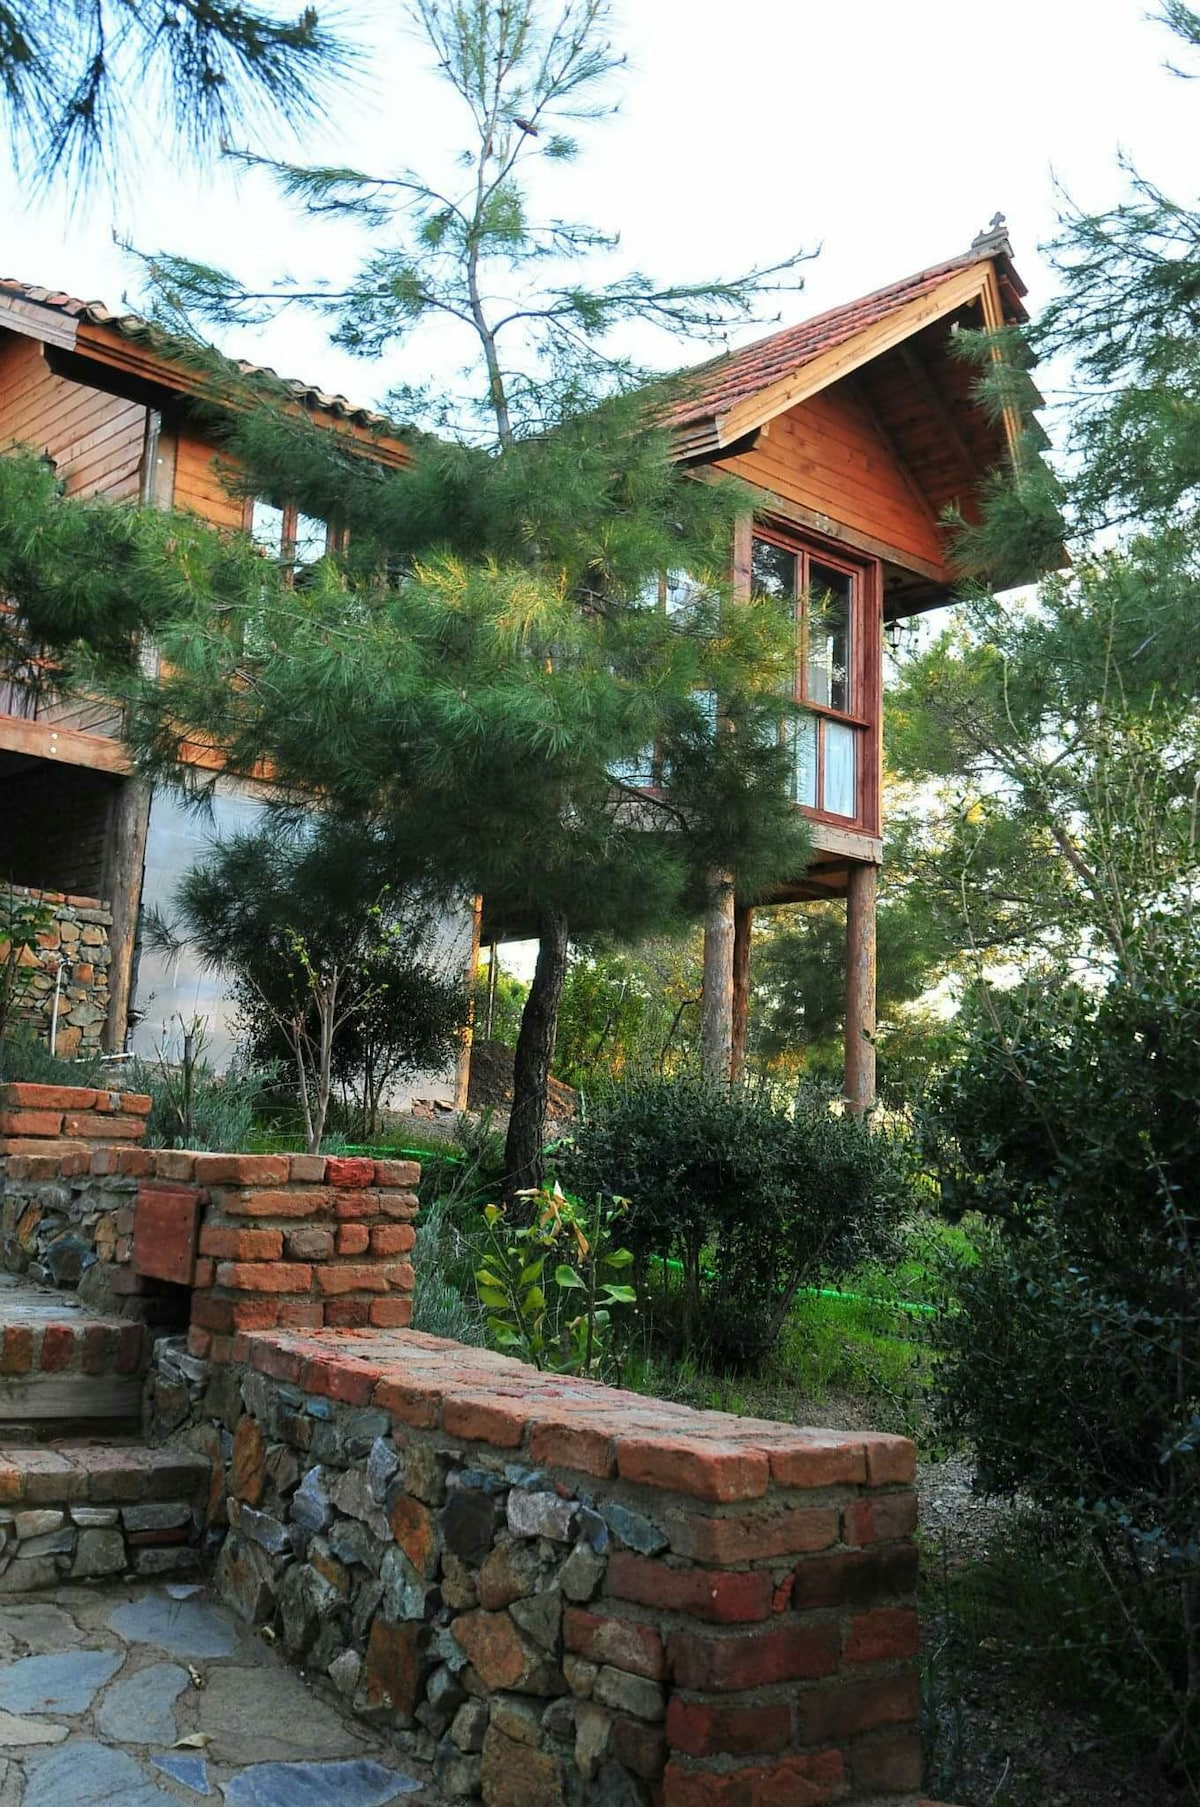 Kayserkaya Pine Cone House